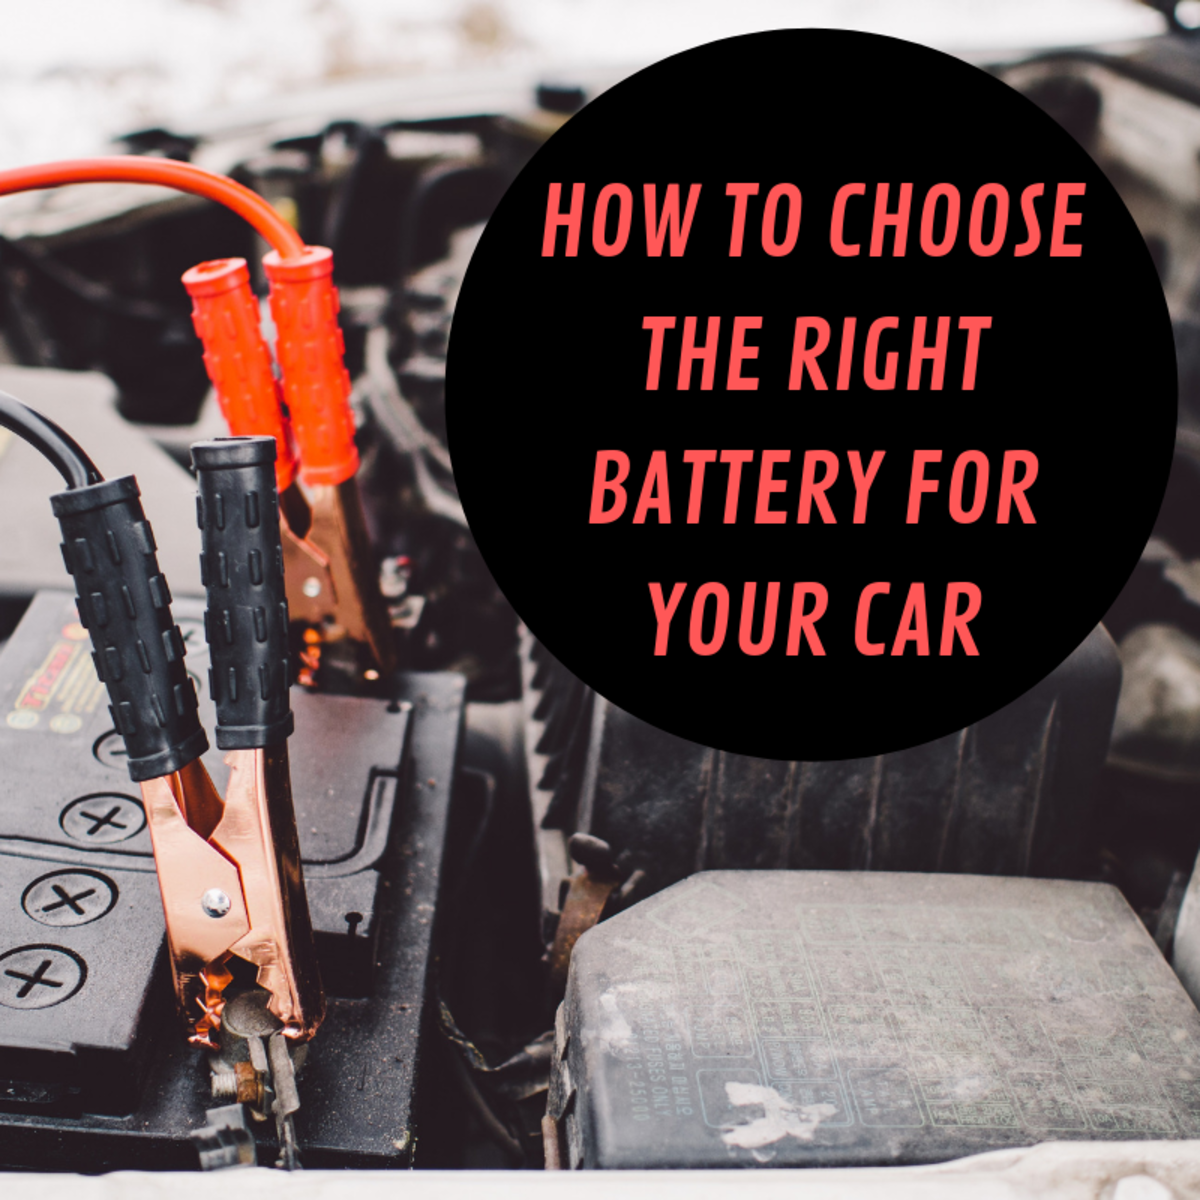 Motorcraft Battery Warranty Chart